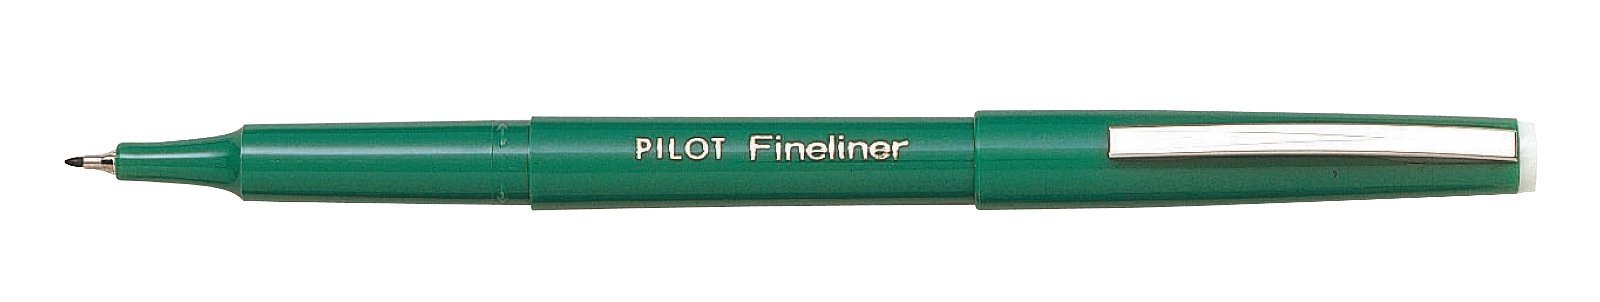 Pilot fineliner